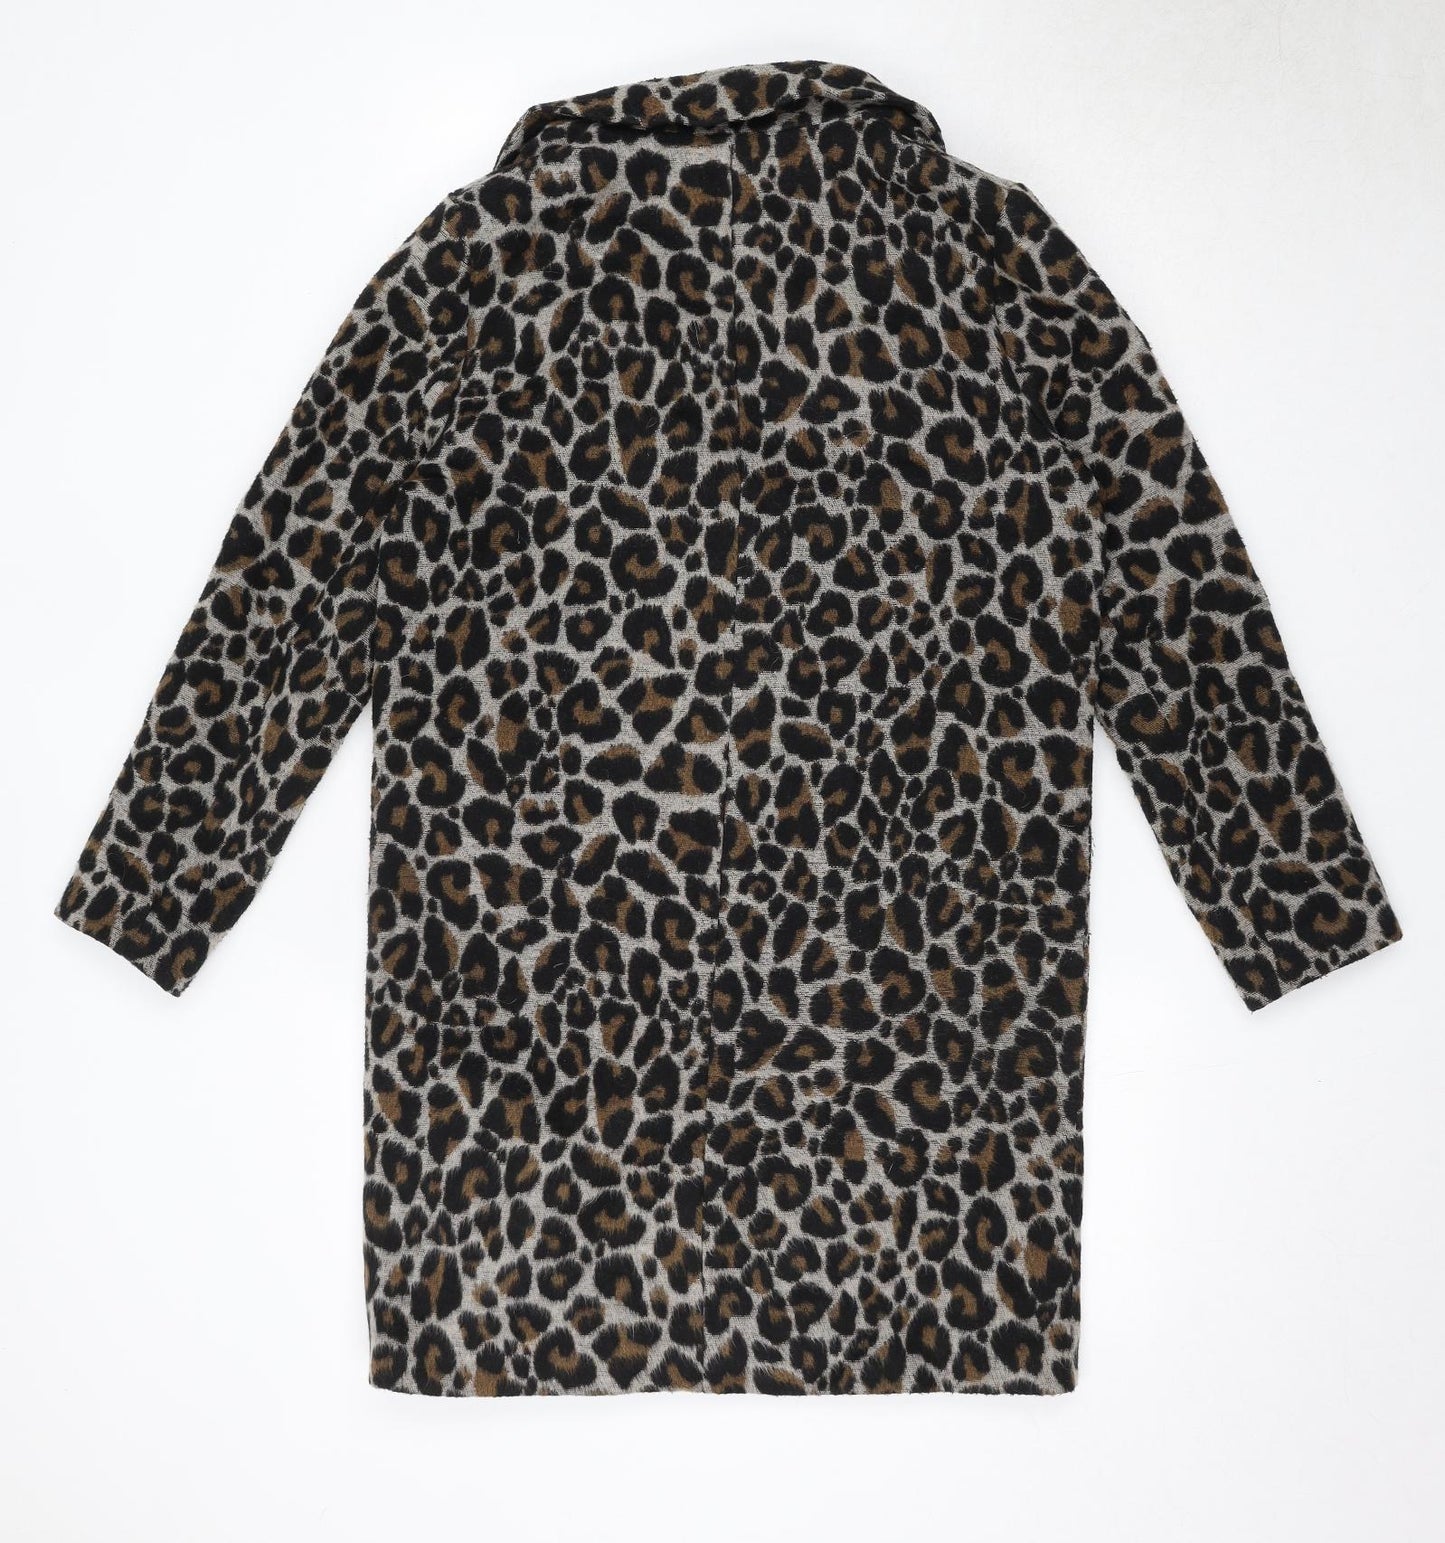 Topshop Womens Black Animal Print Overcoat Coat Size 10 Snap - Leopard Print